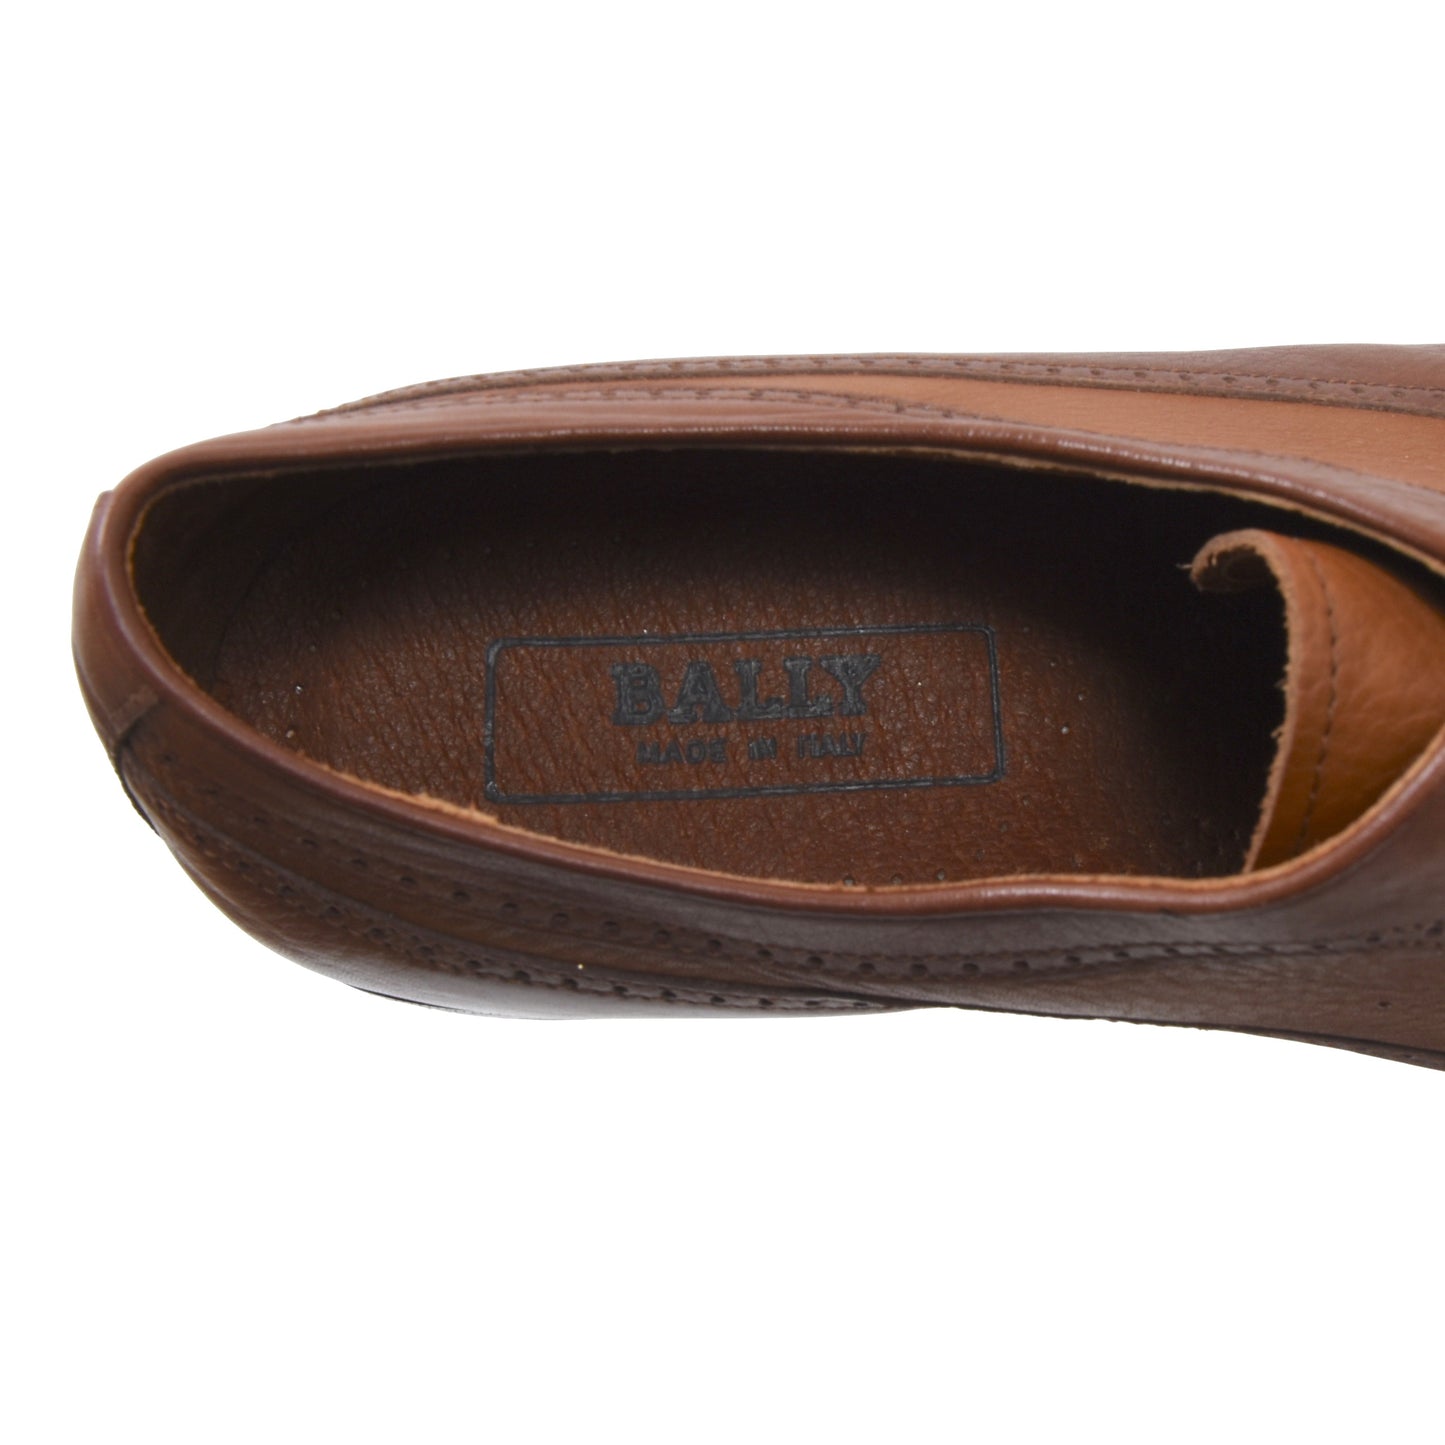 NOS Bally Suede Shoes Size 44 - Brown & Tan